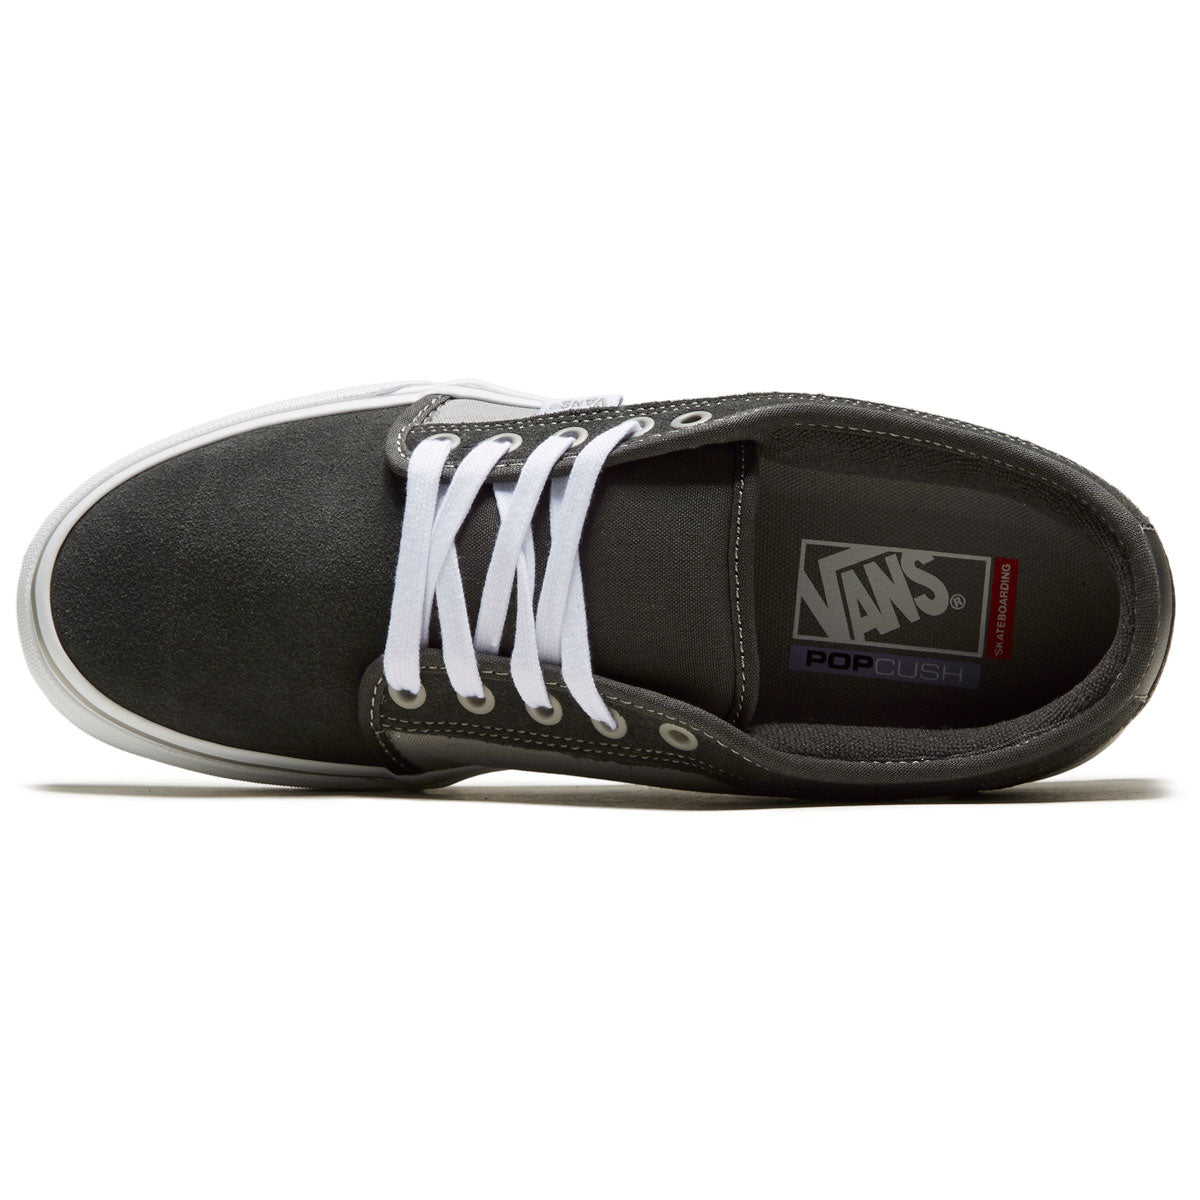 Vans Skate Chukka Low Shoes - Suede/Canvas Dark Grey/White – CCS